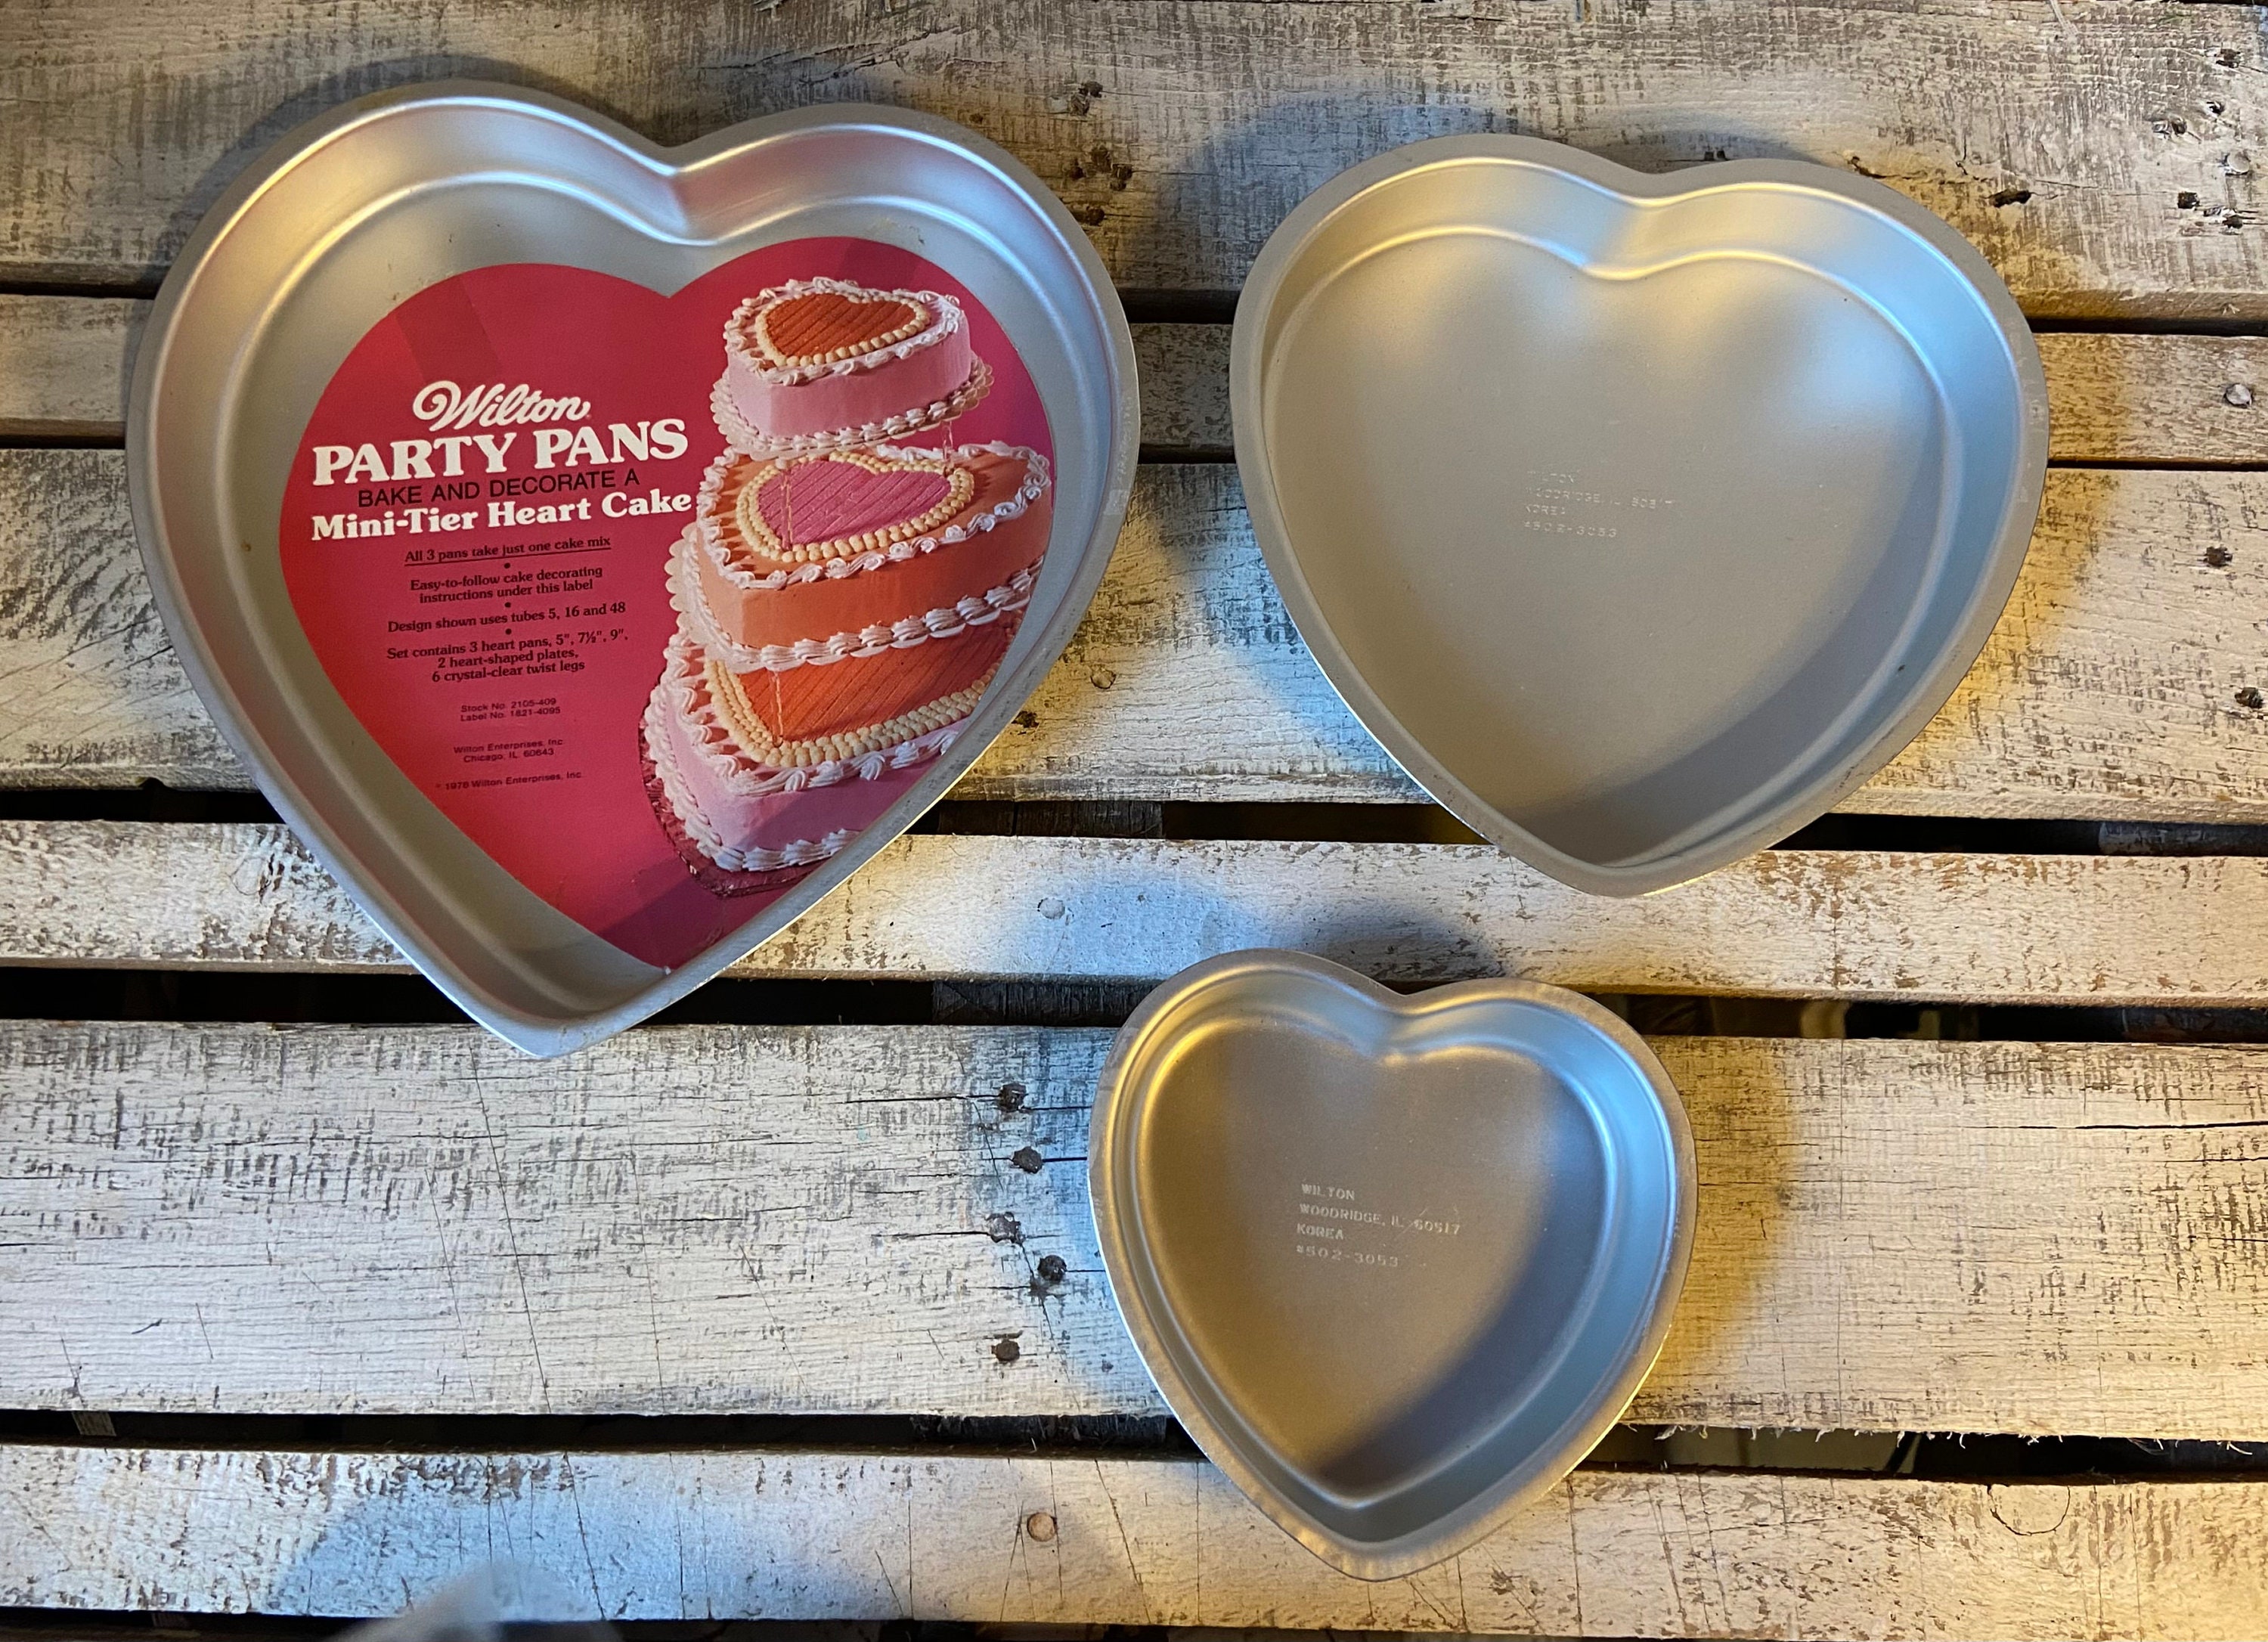 Wilton 8 Heart-Shaped Cake Pan - WebstaurantStore